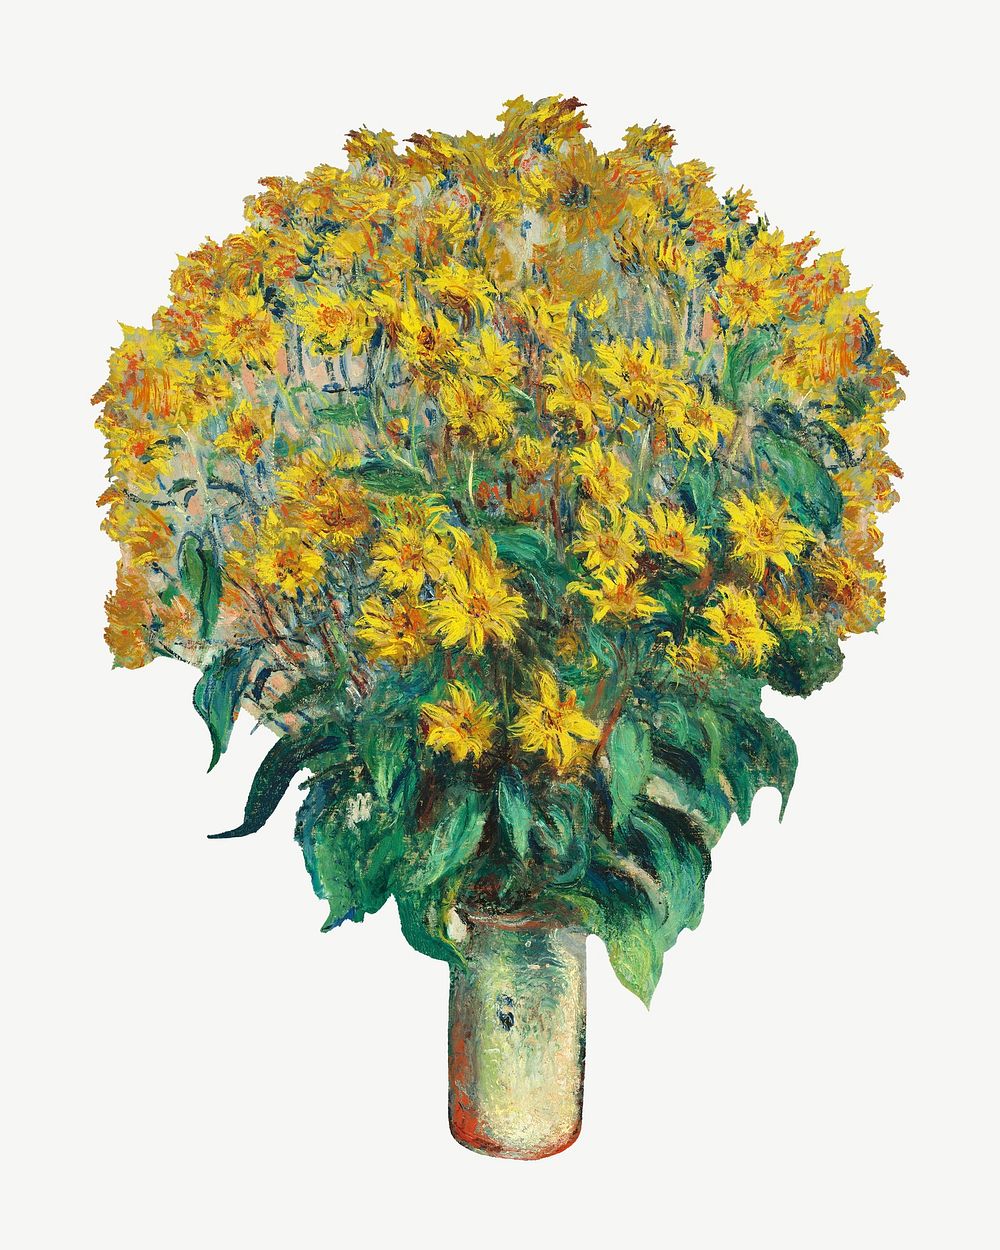 Claude Monet's Jerusalem Artichoke Flower, famous painting psd, remixed by rawpixel